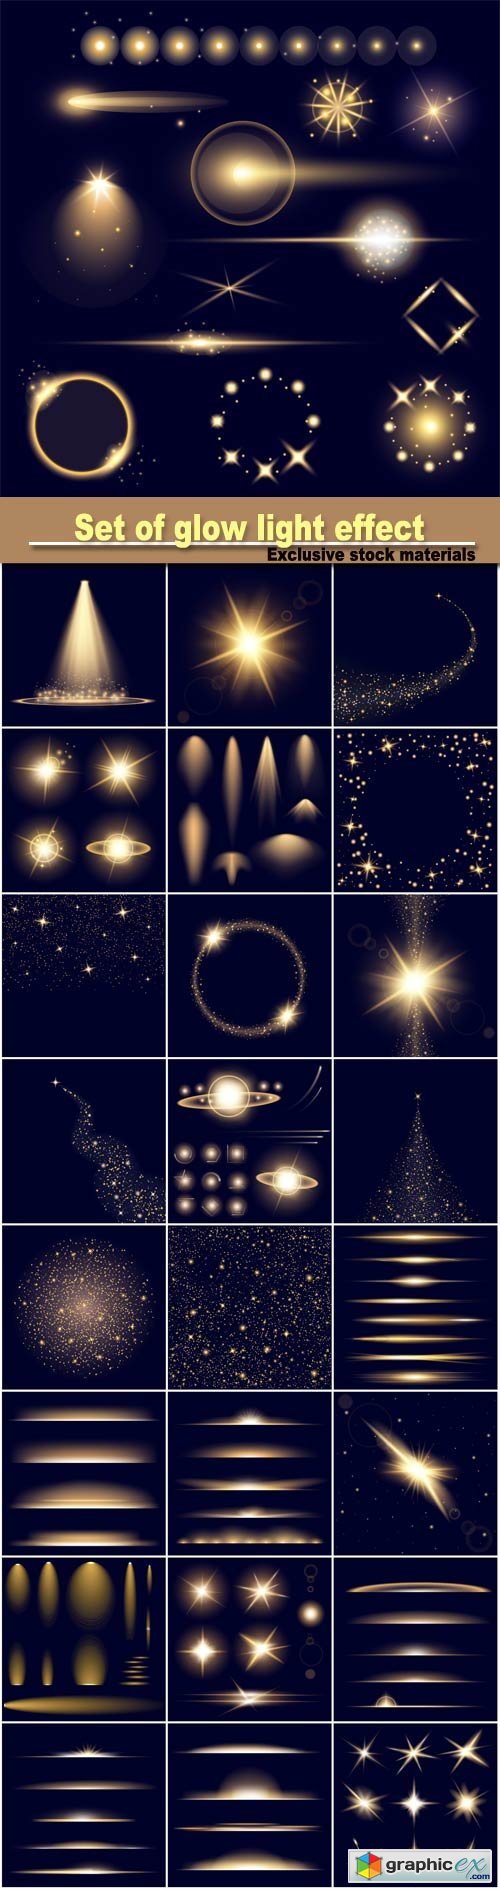 set of glow light effect stars bursts with sparkles, for illustration template art design